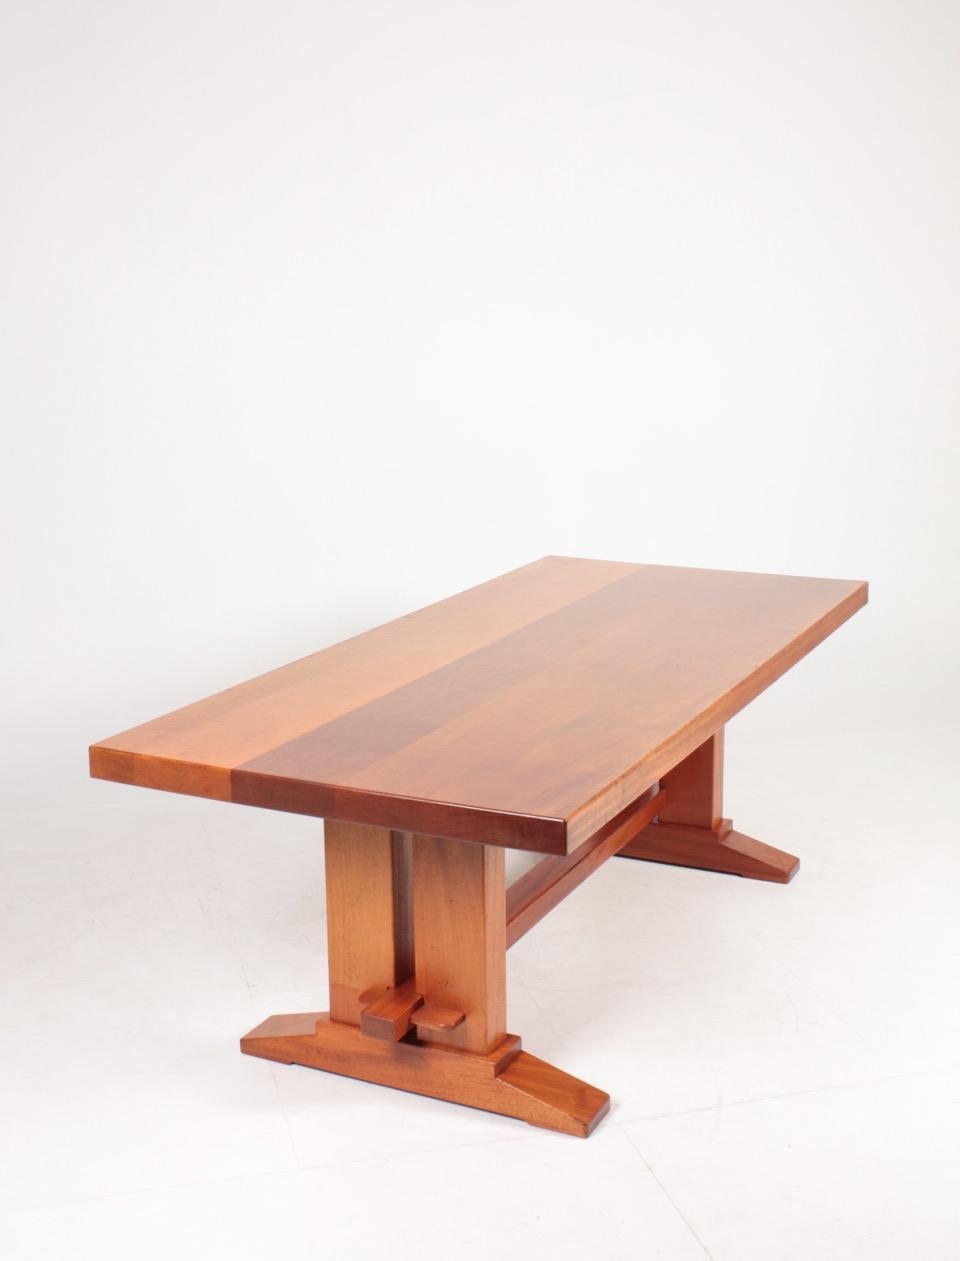 Custom Made Table in Solid Mahogany by Søborg Møbler, Danish Modern Design 1980s For Sale 2